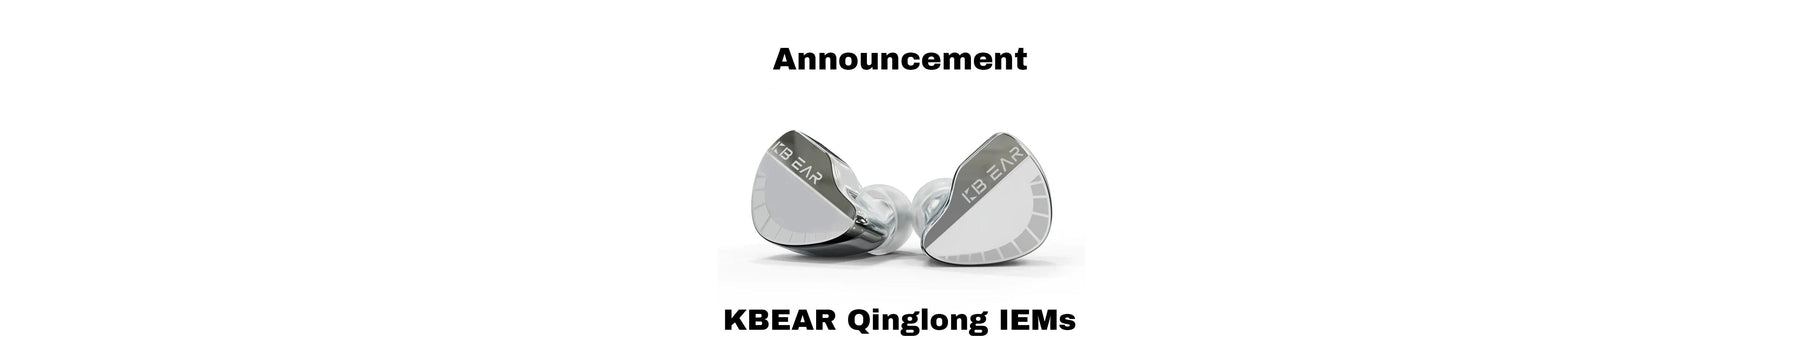 KBEar Qinglong: Brand New Dynamic Driver IEMs With PU+PEEK Dual-layered Diaphragm & Mirror-Finished Metallic Cavities